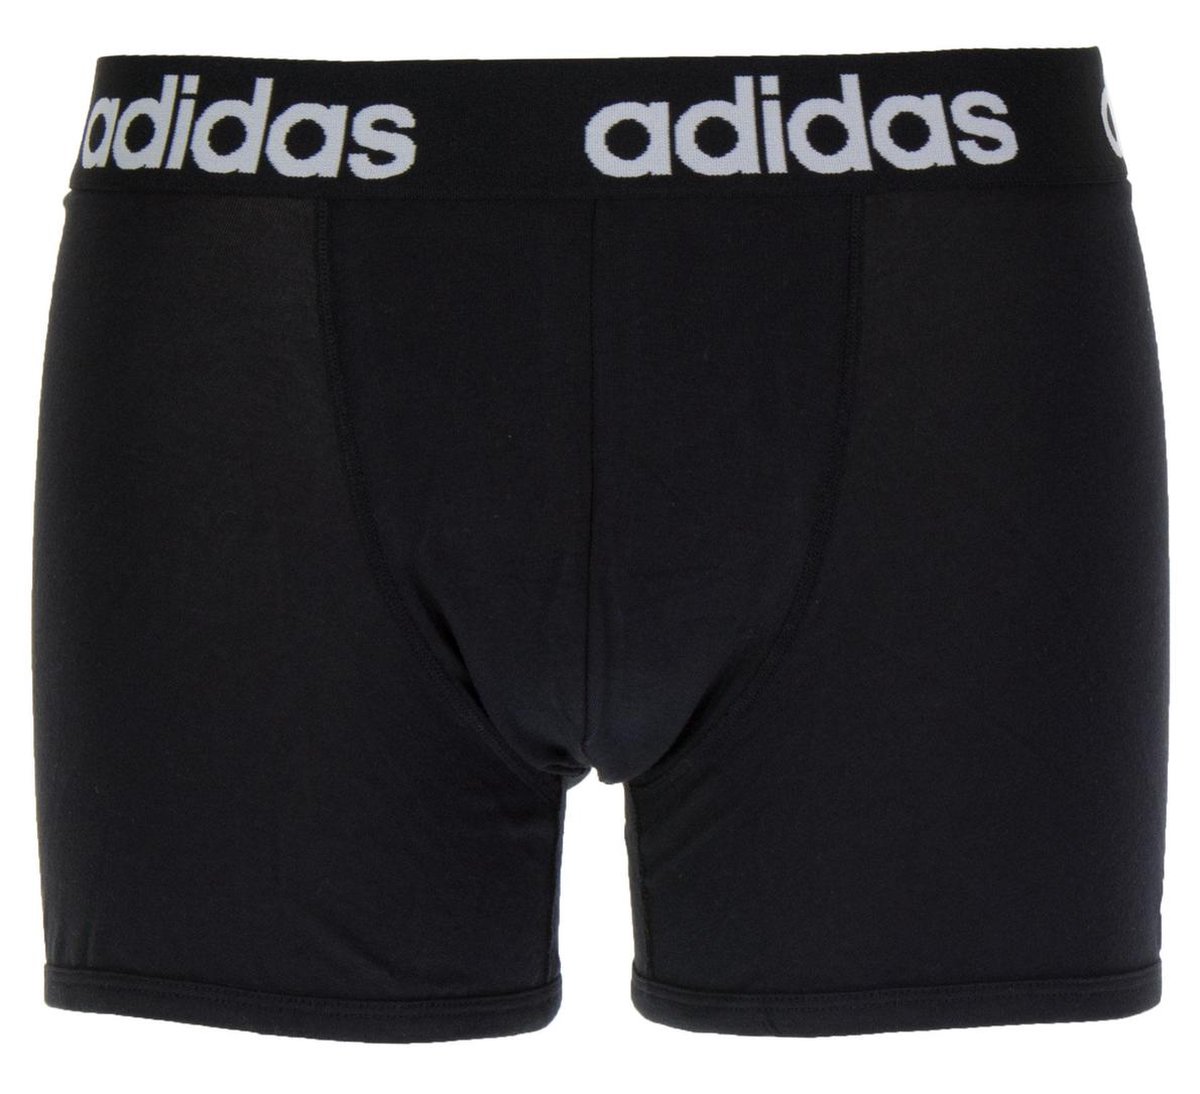 adidas Boxershort - Maat XXL - Mannen - zwart/grijs/wit | bol.com